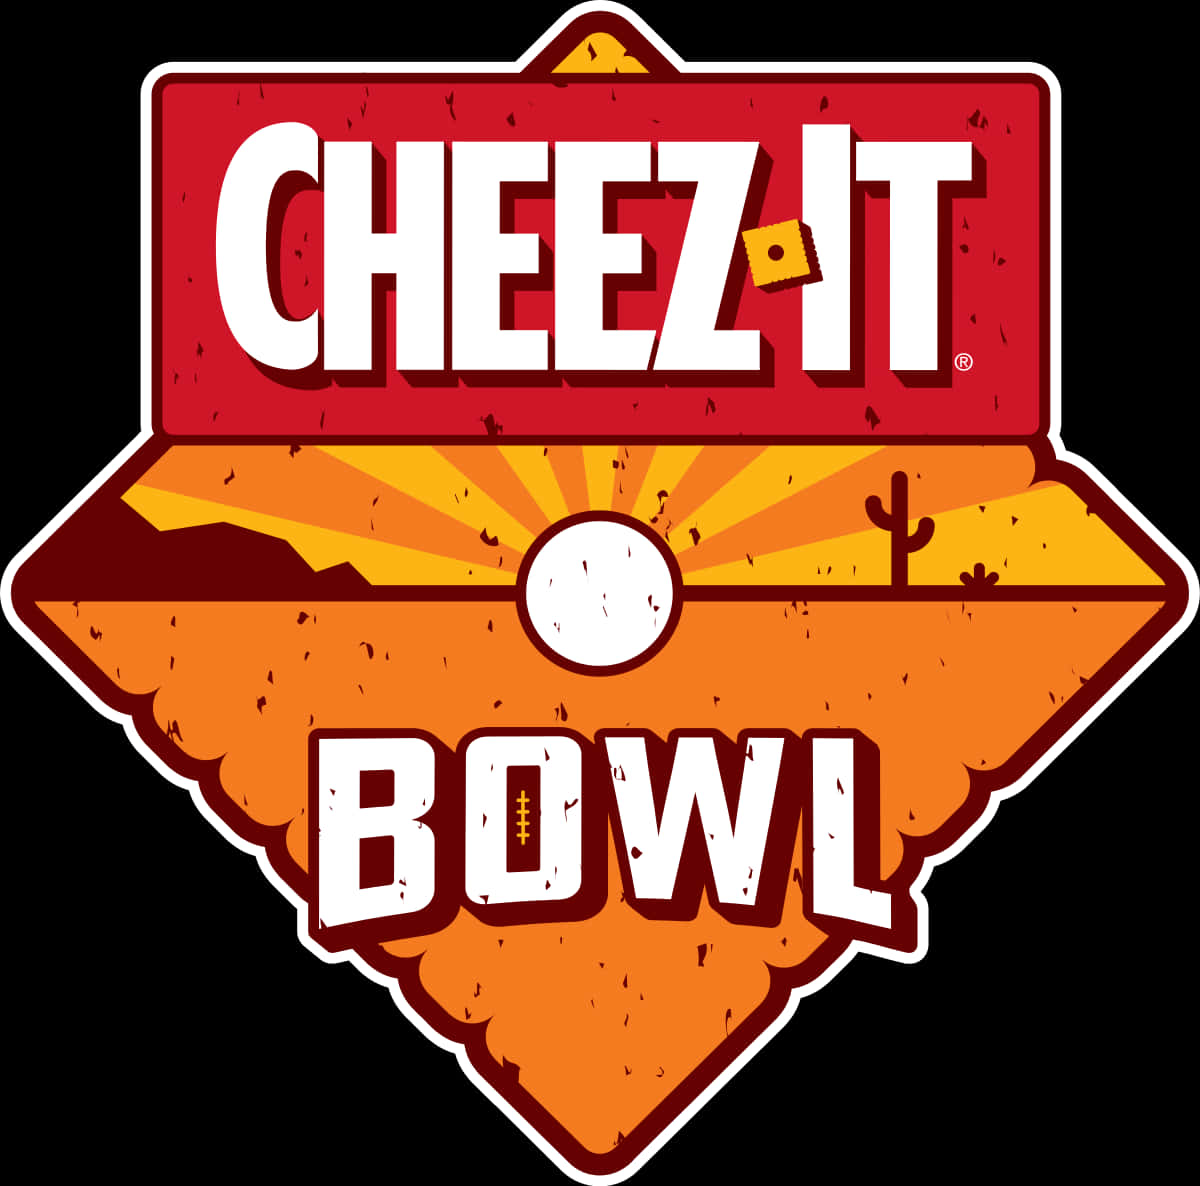 A Logo For A Bowl